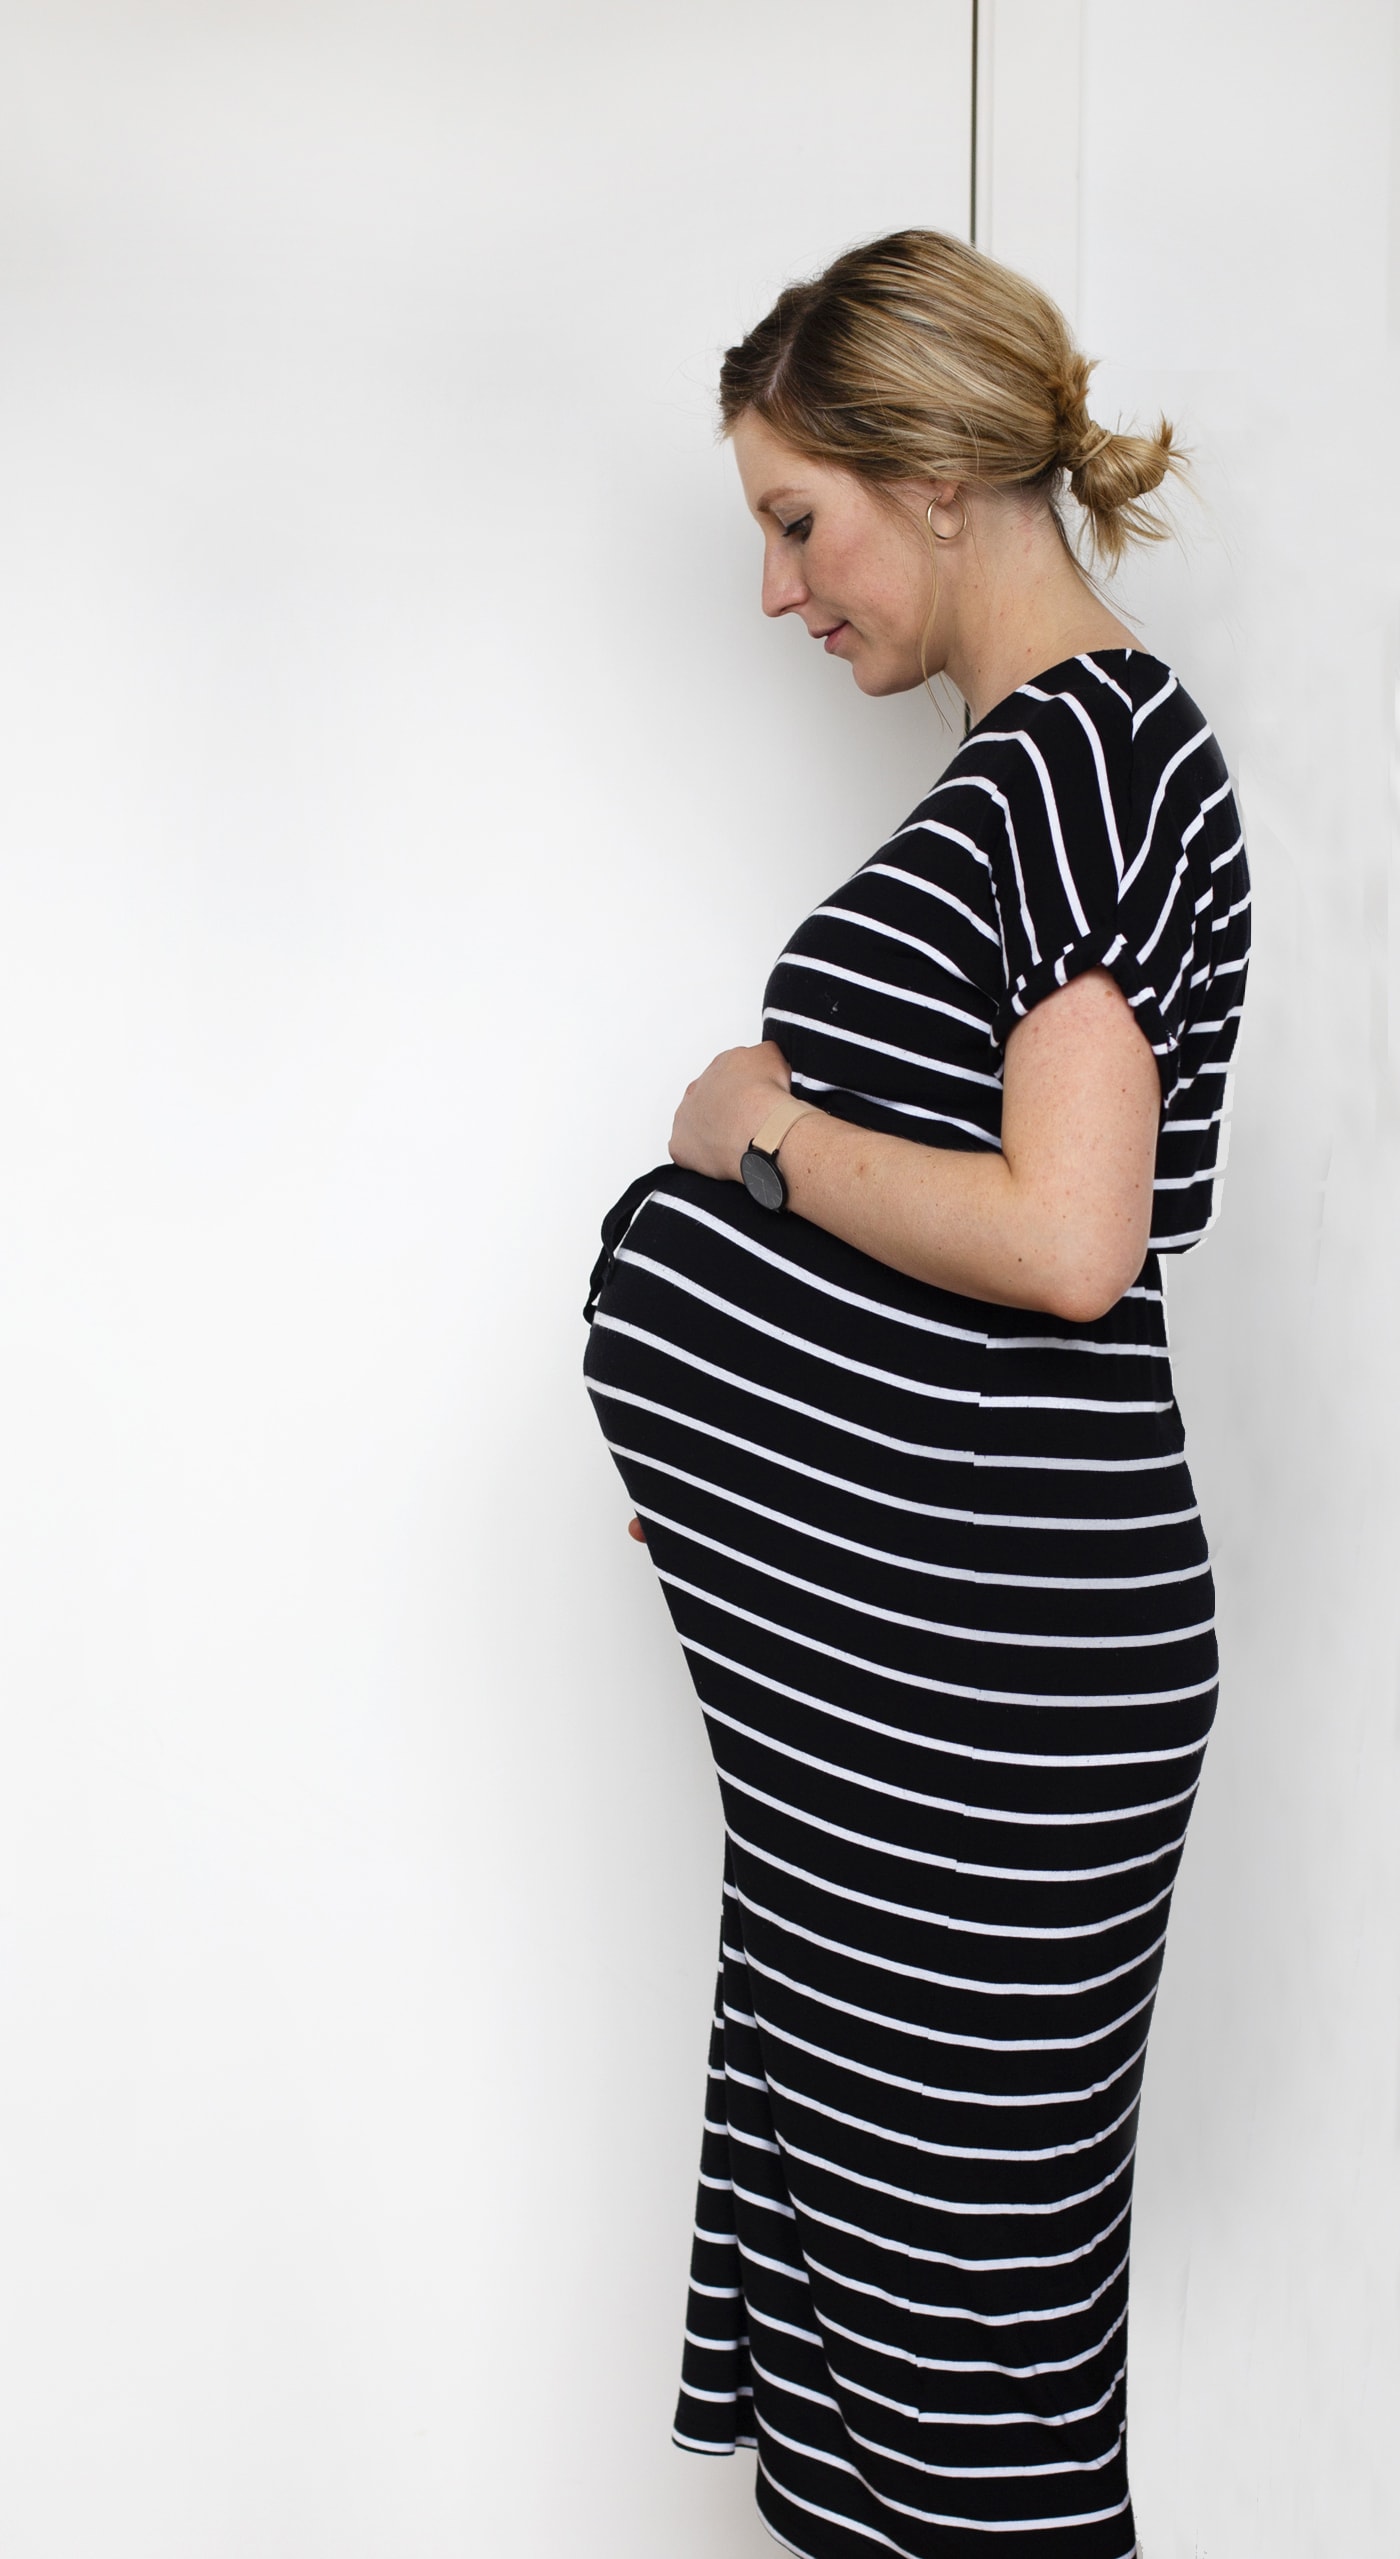 Pregnancy Diary: Third Trimester